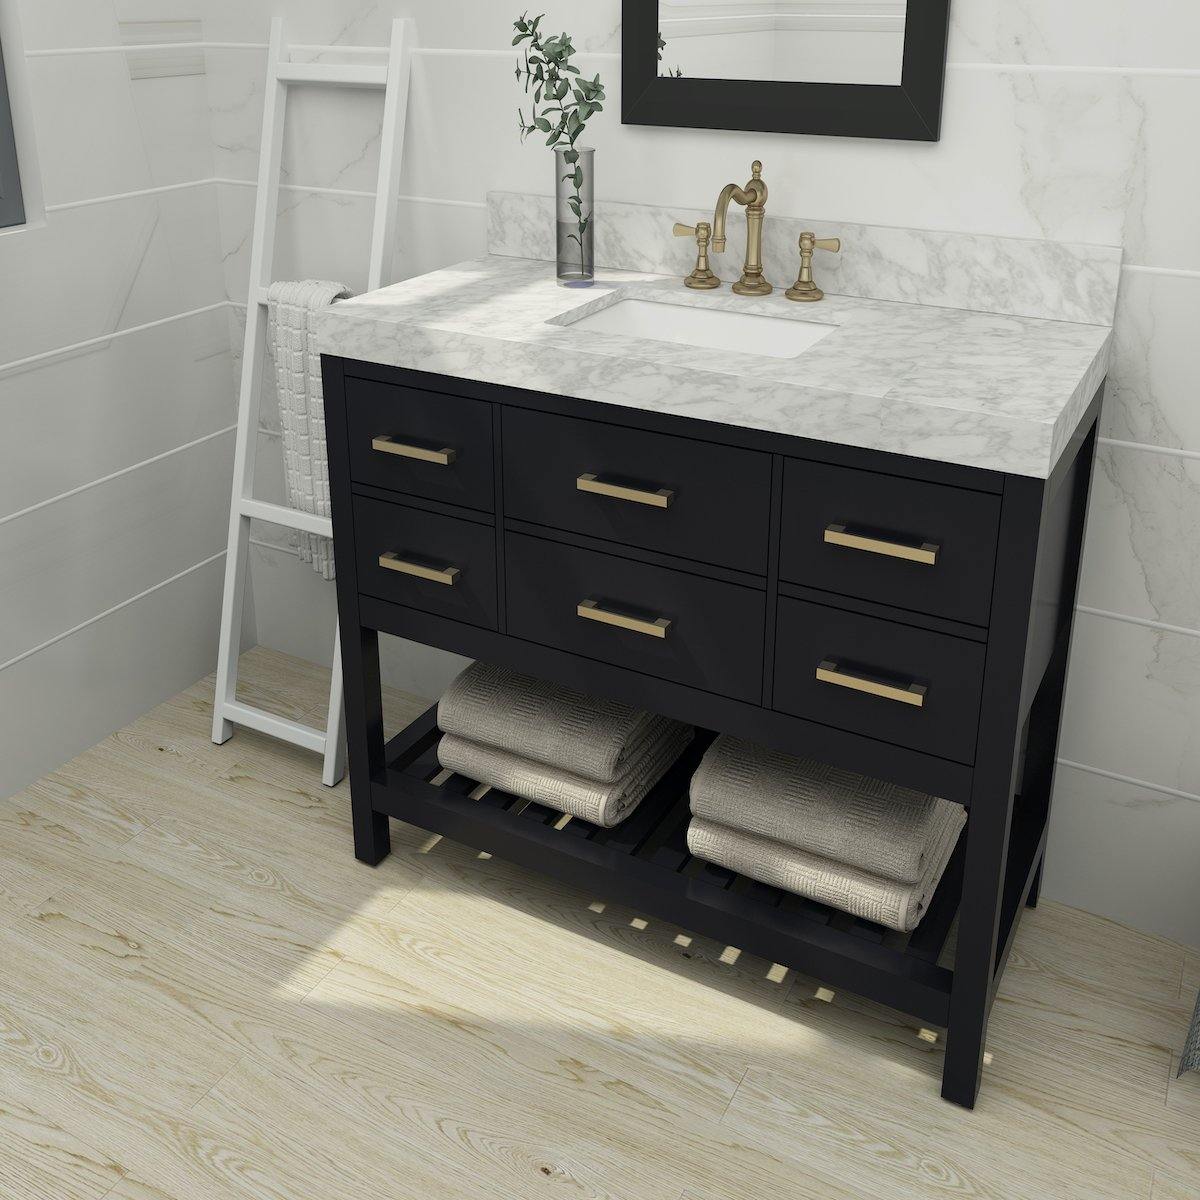 Ancerre Designs Elizabeth 48 Inch Onyx Black Single Vanity in Bathroom